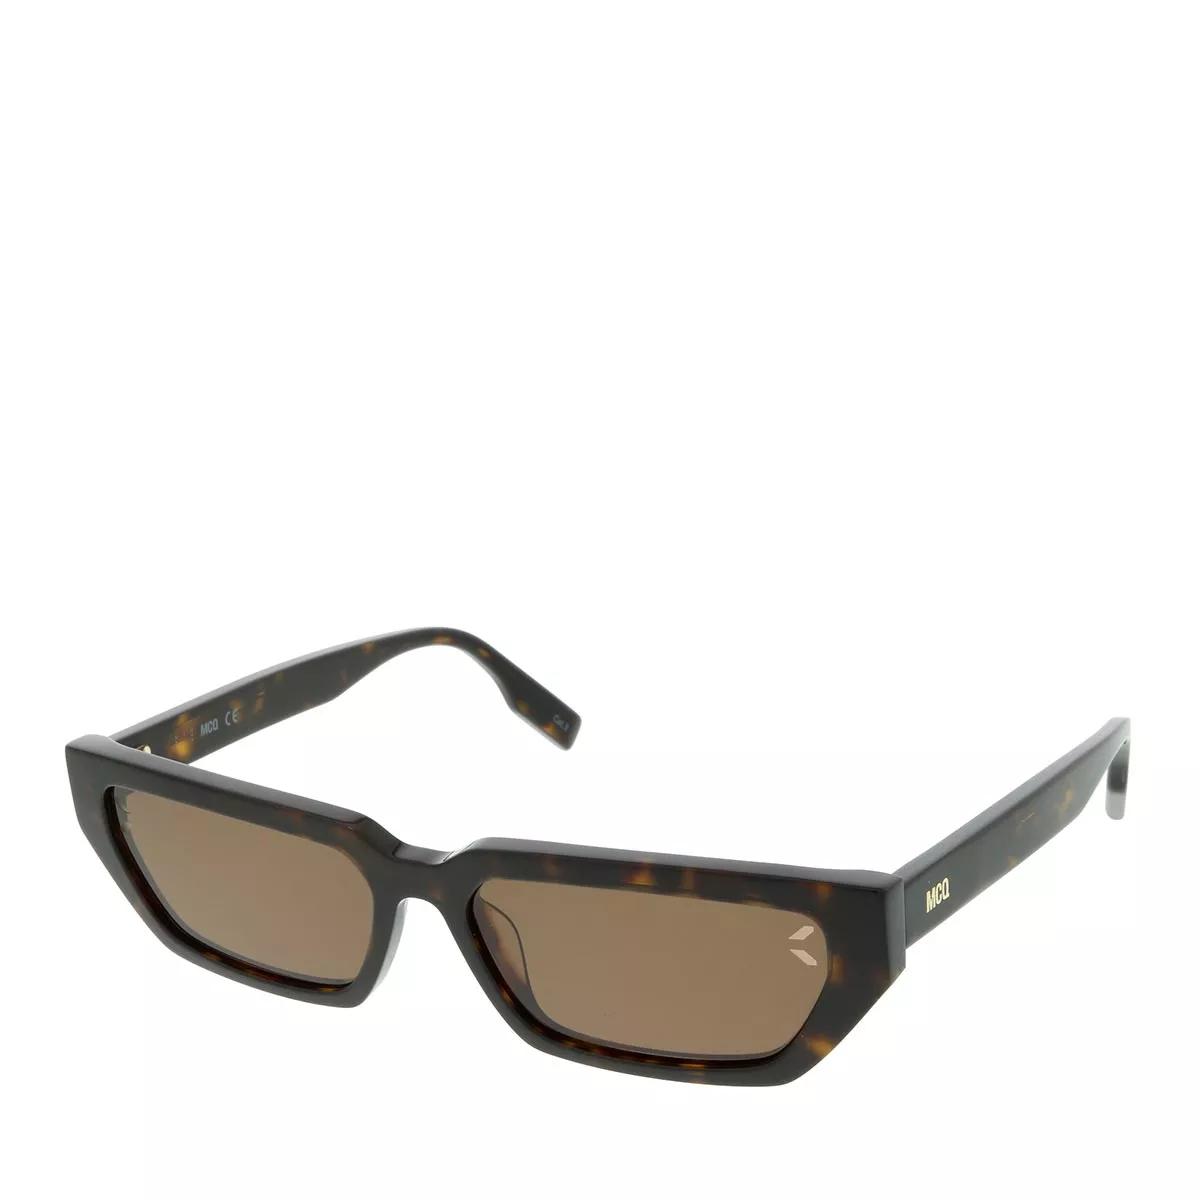 McQ MQ0302S-002 56 Sunglass UNISEX ACETATE HAVANA | Sunglasses ...